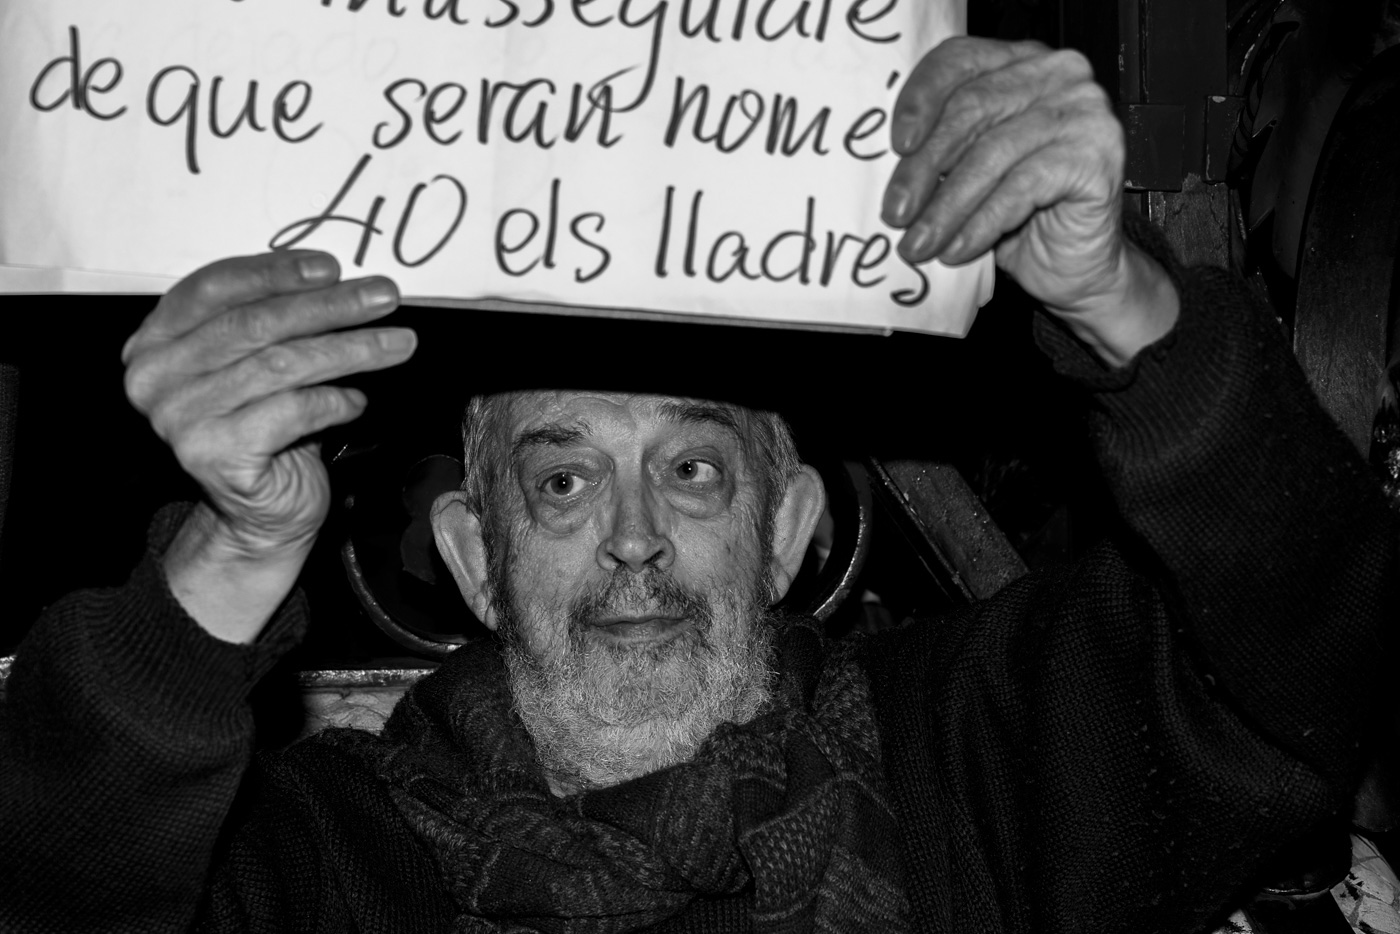 Photography  journalism   14n huelga barcelona riot black and white